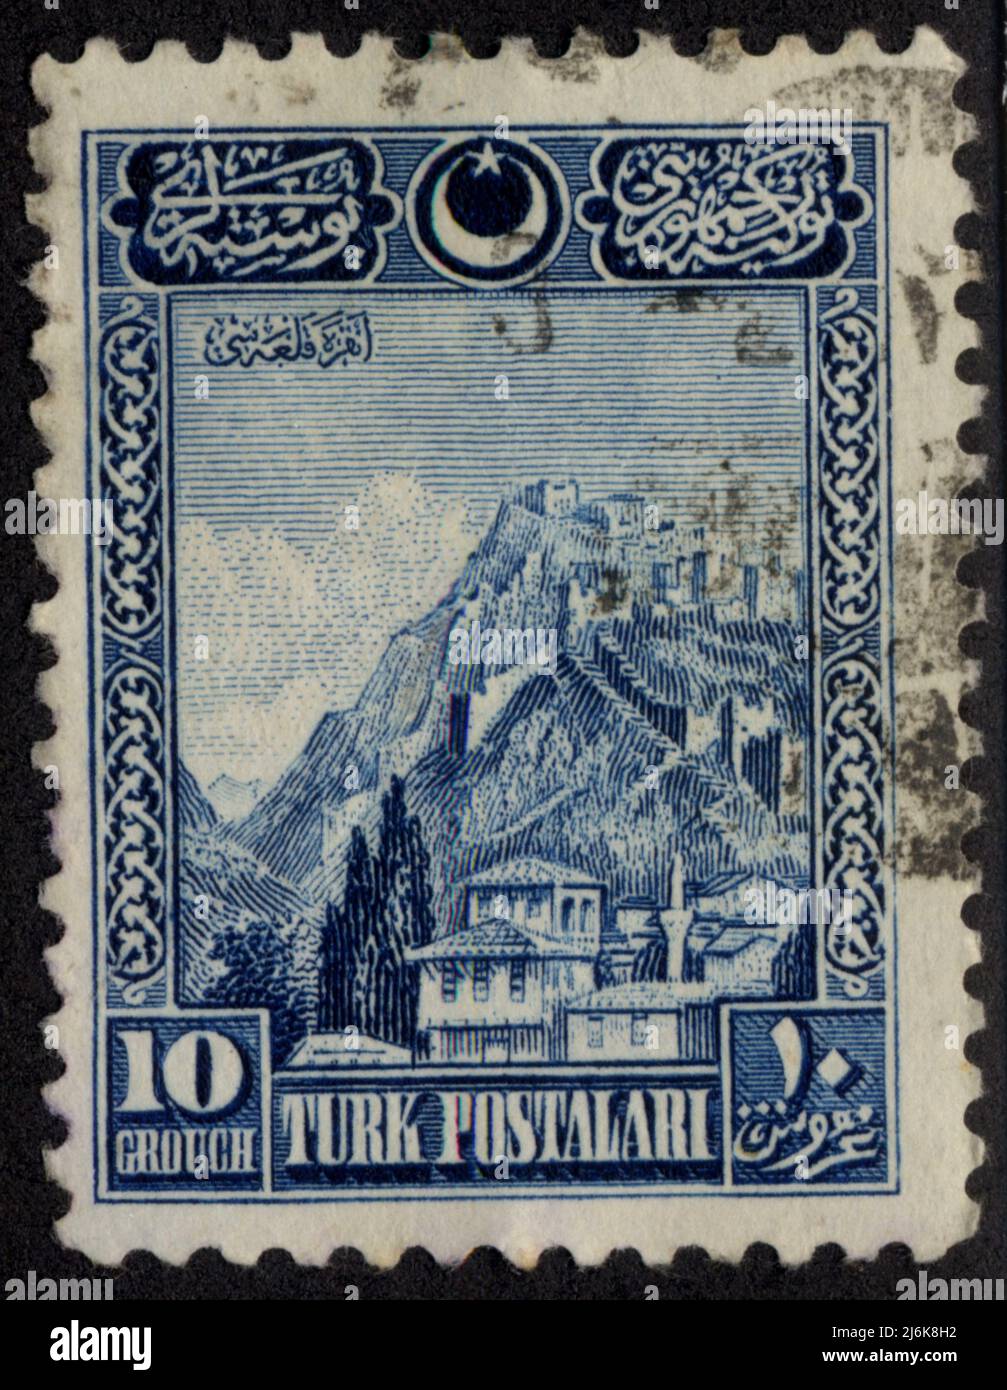 Timbre oblitéré Turk Postalari, 10 Grouch Stock Photo